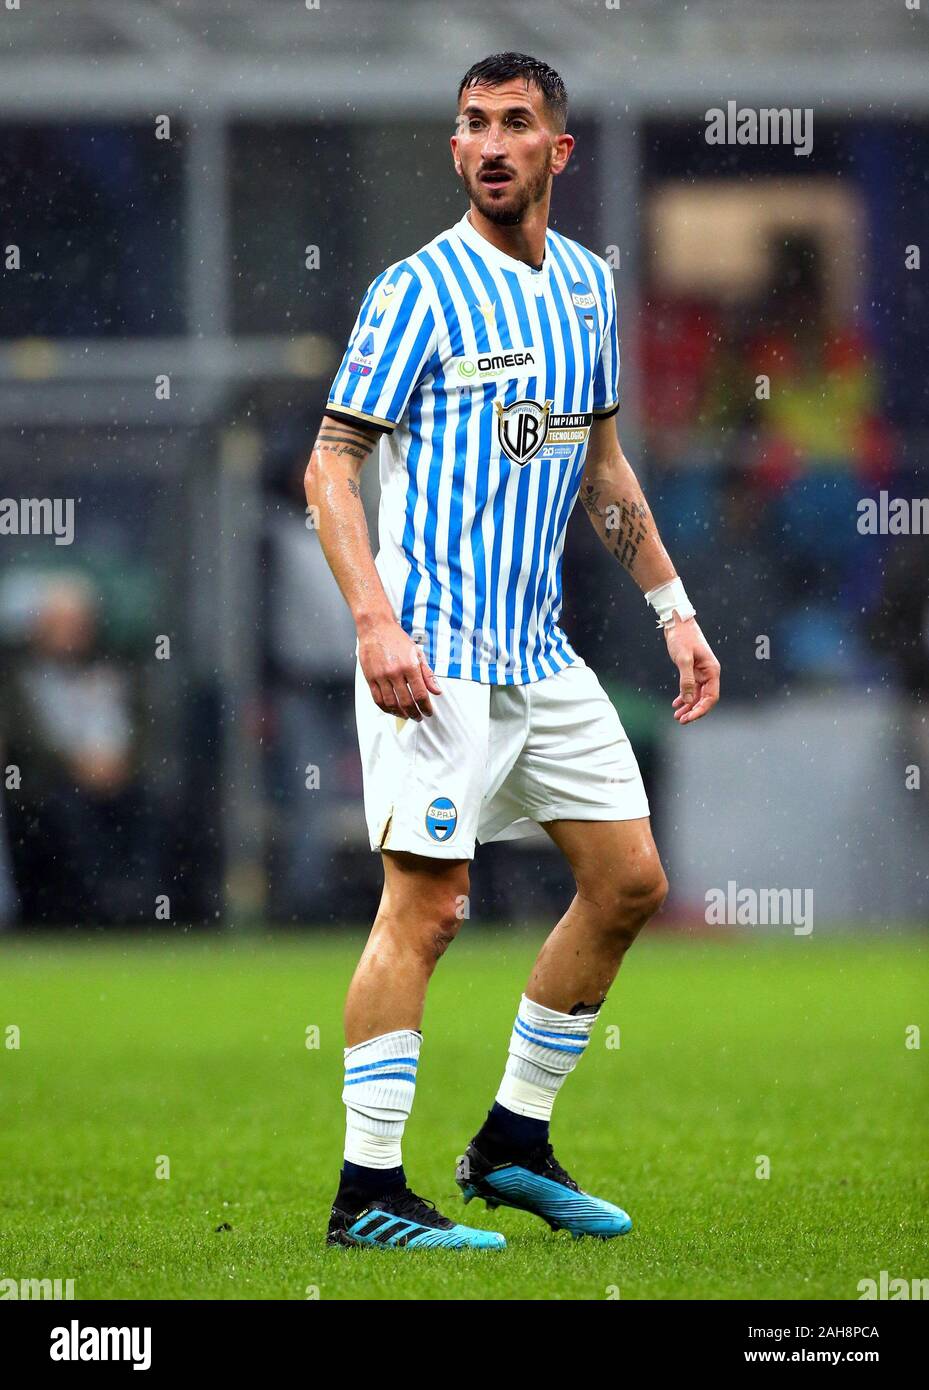 Milan, ITALIE - 01 décembre 2019: Mirko Valdifiori regarde pendant la série A 2019/2020 INTER / SPAL au stade San Siro. Banque D'Images